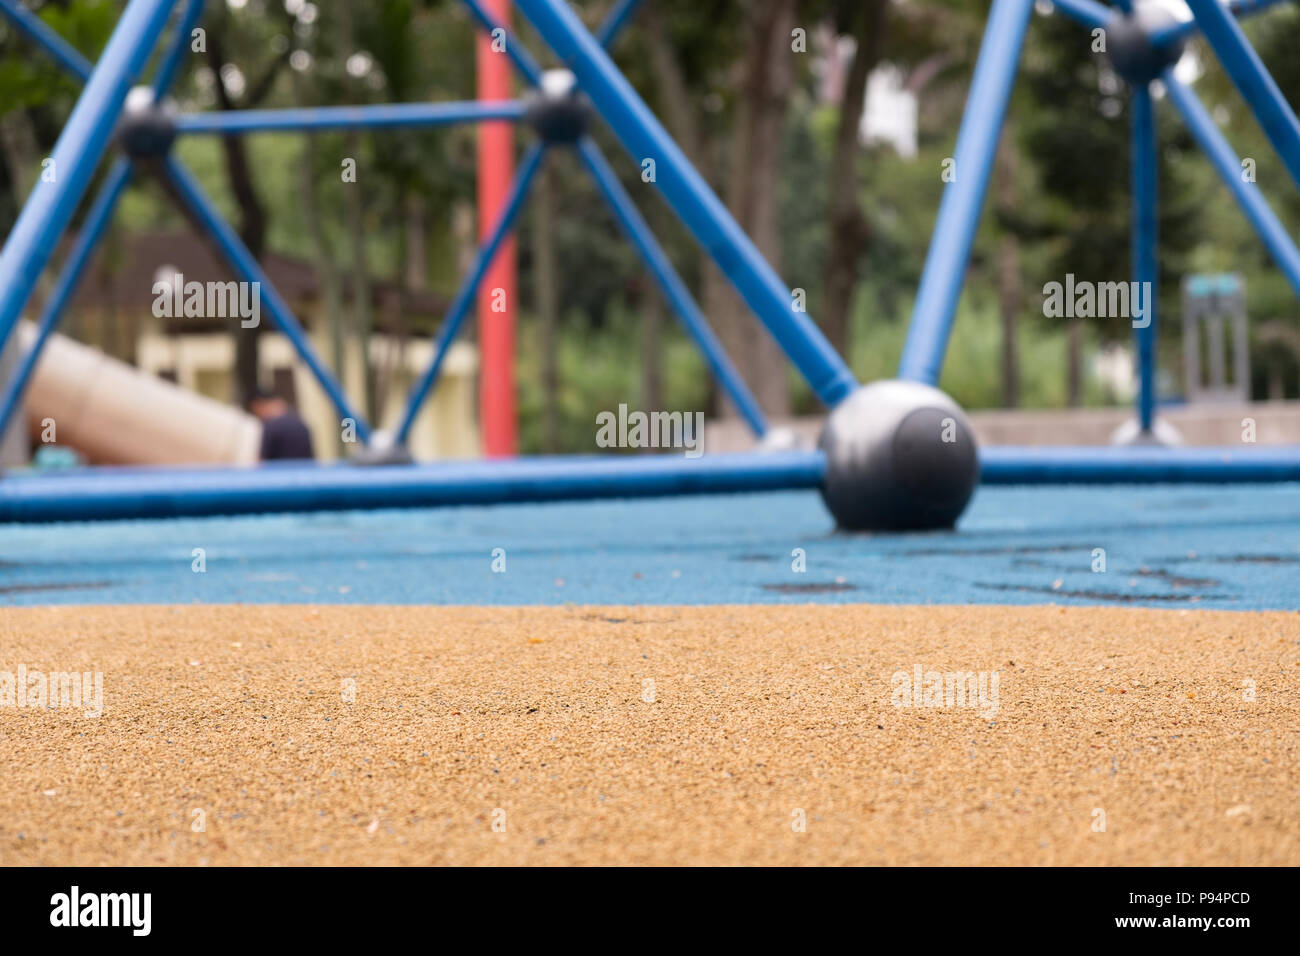 Children playground with foreground in focus Stock Photo